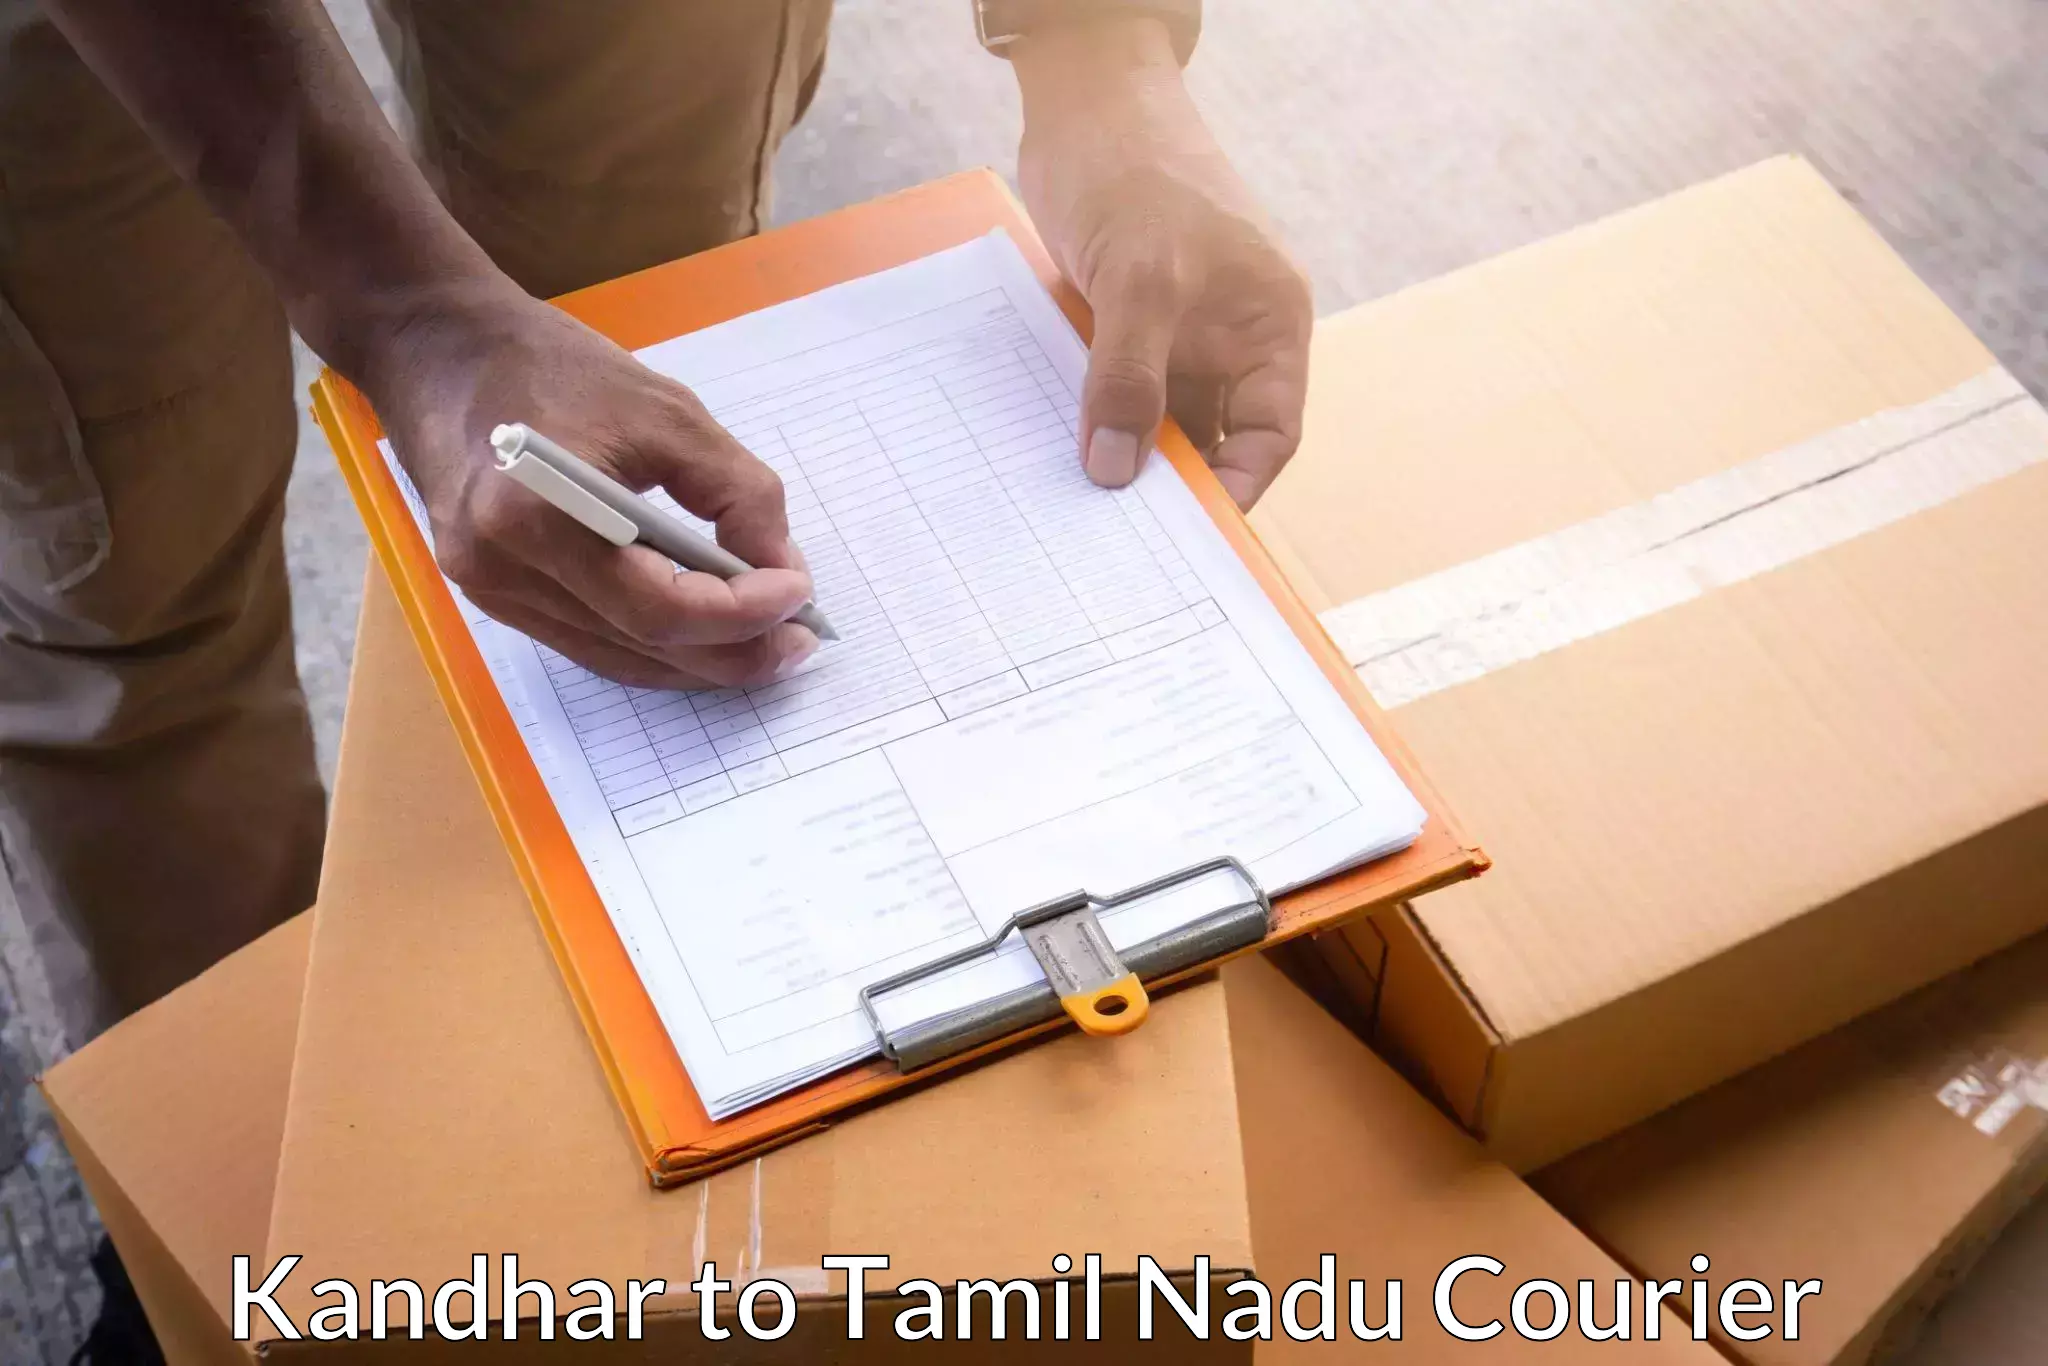 Courier service comparison Kandhar to Padi